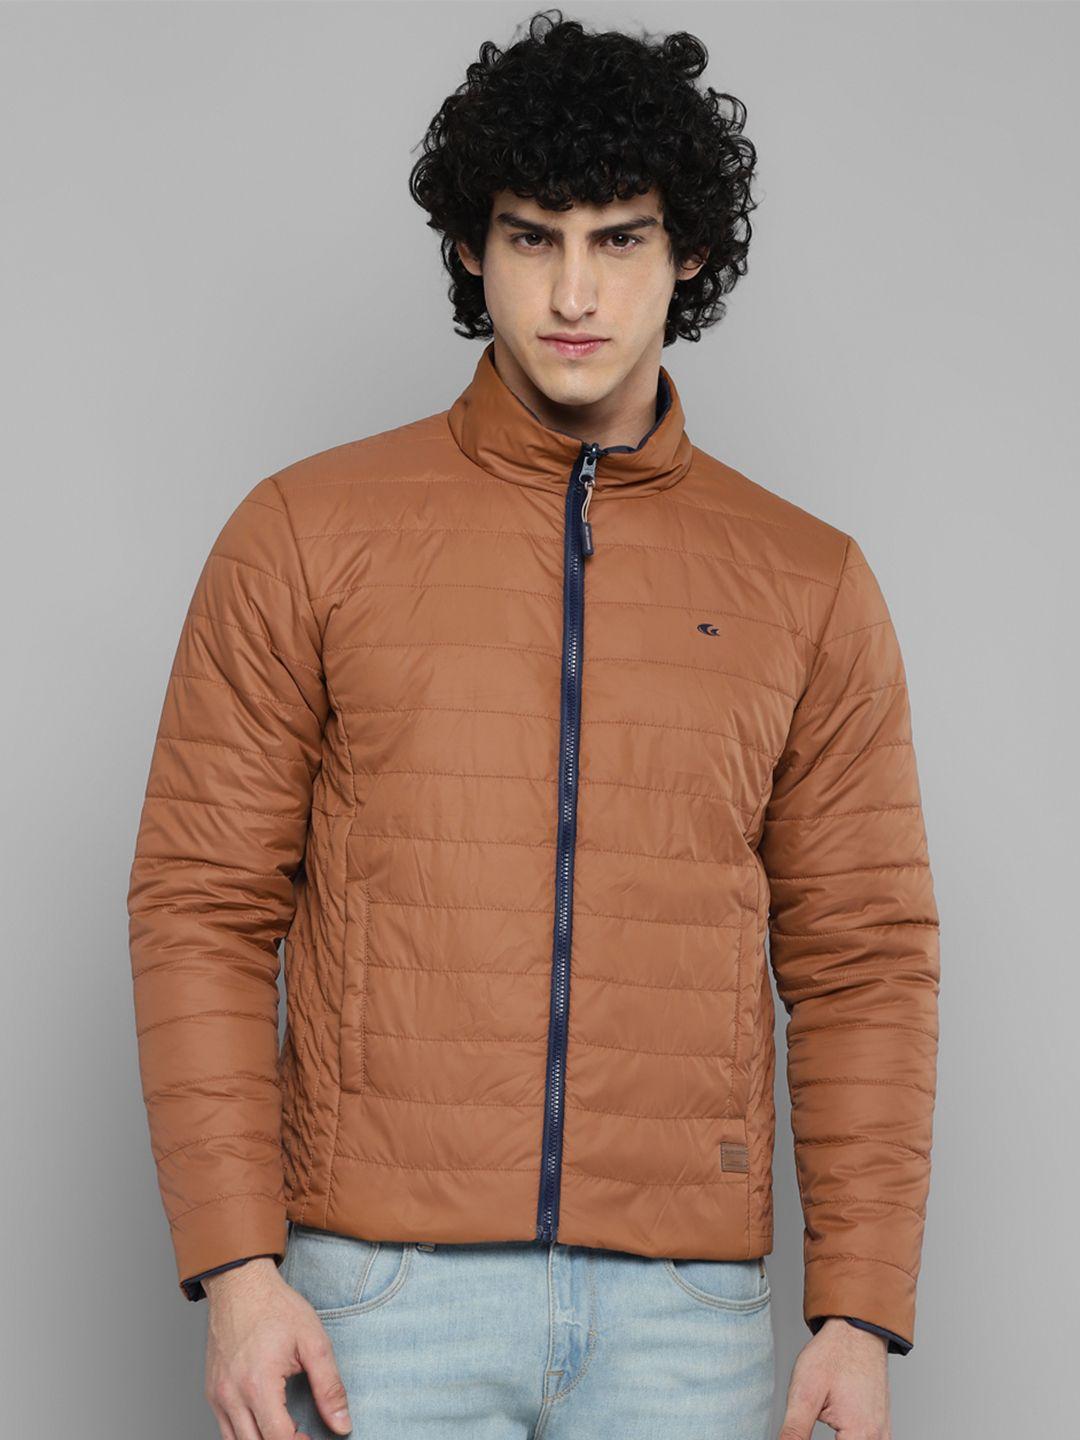 allen-cooper-mock-collar-long-sleeve-reversible-windcheater-padded-jacket